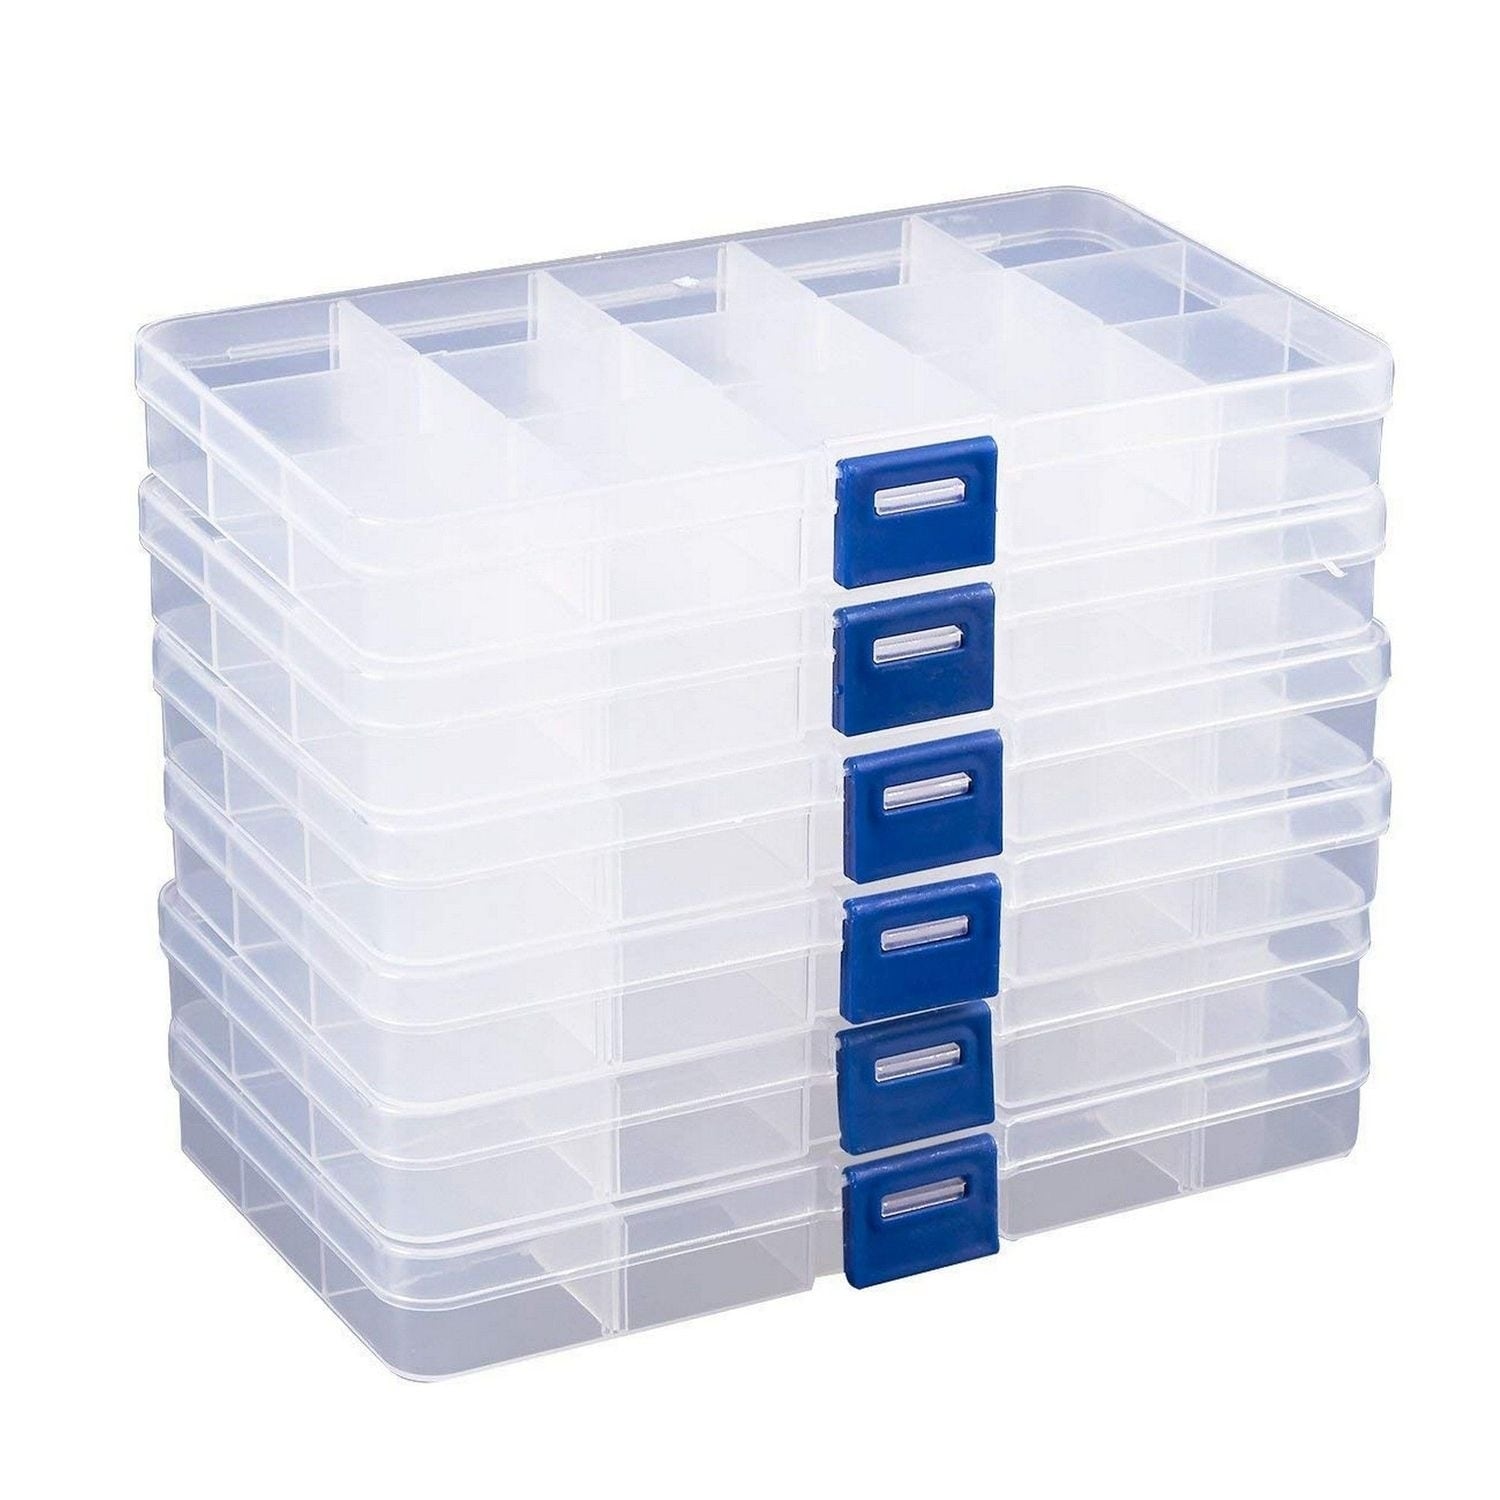 1x Plastic Storage Box Case Jewelry Ornament Bead Container Organizer Craft Tool 